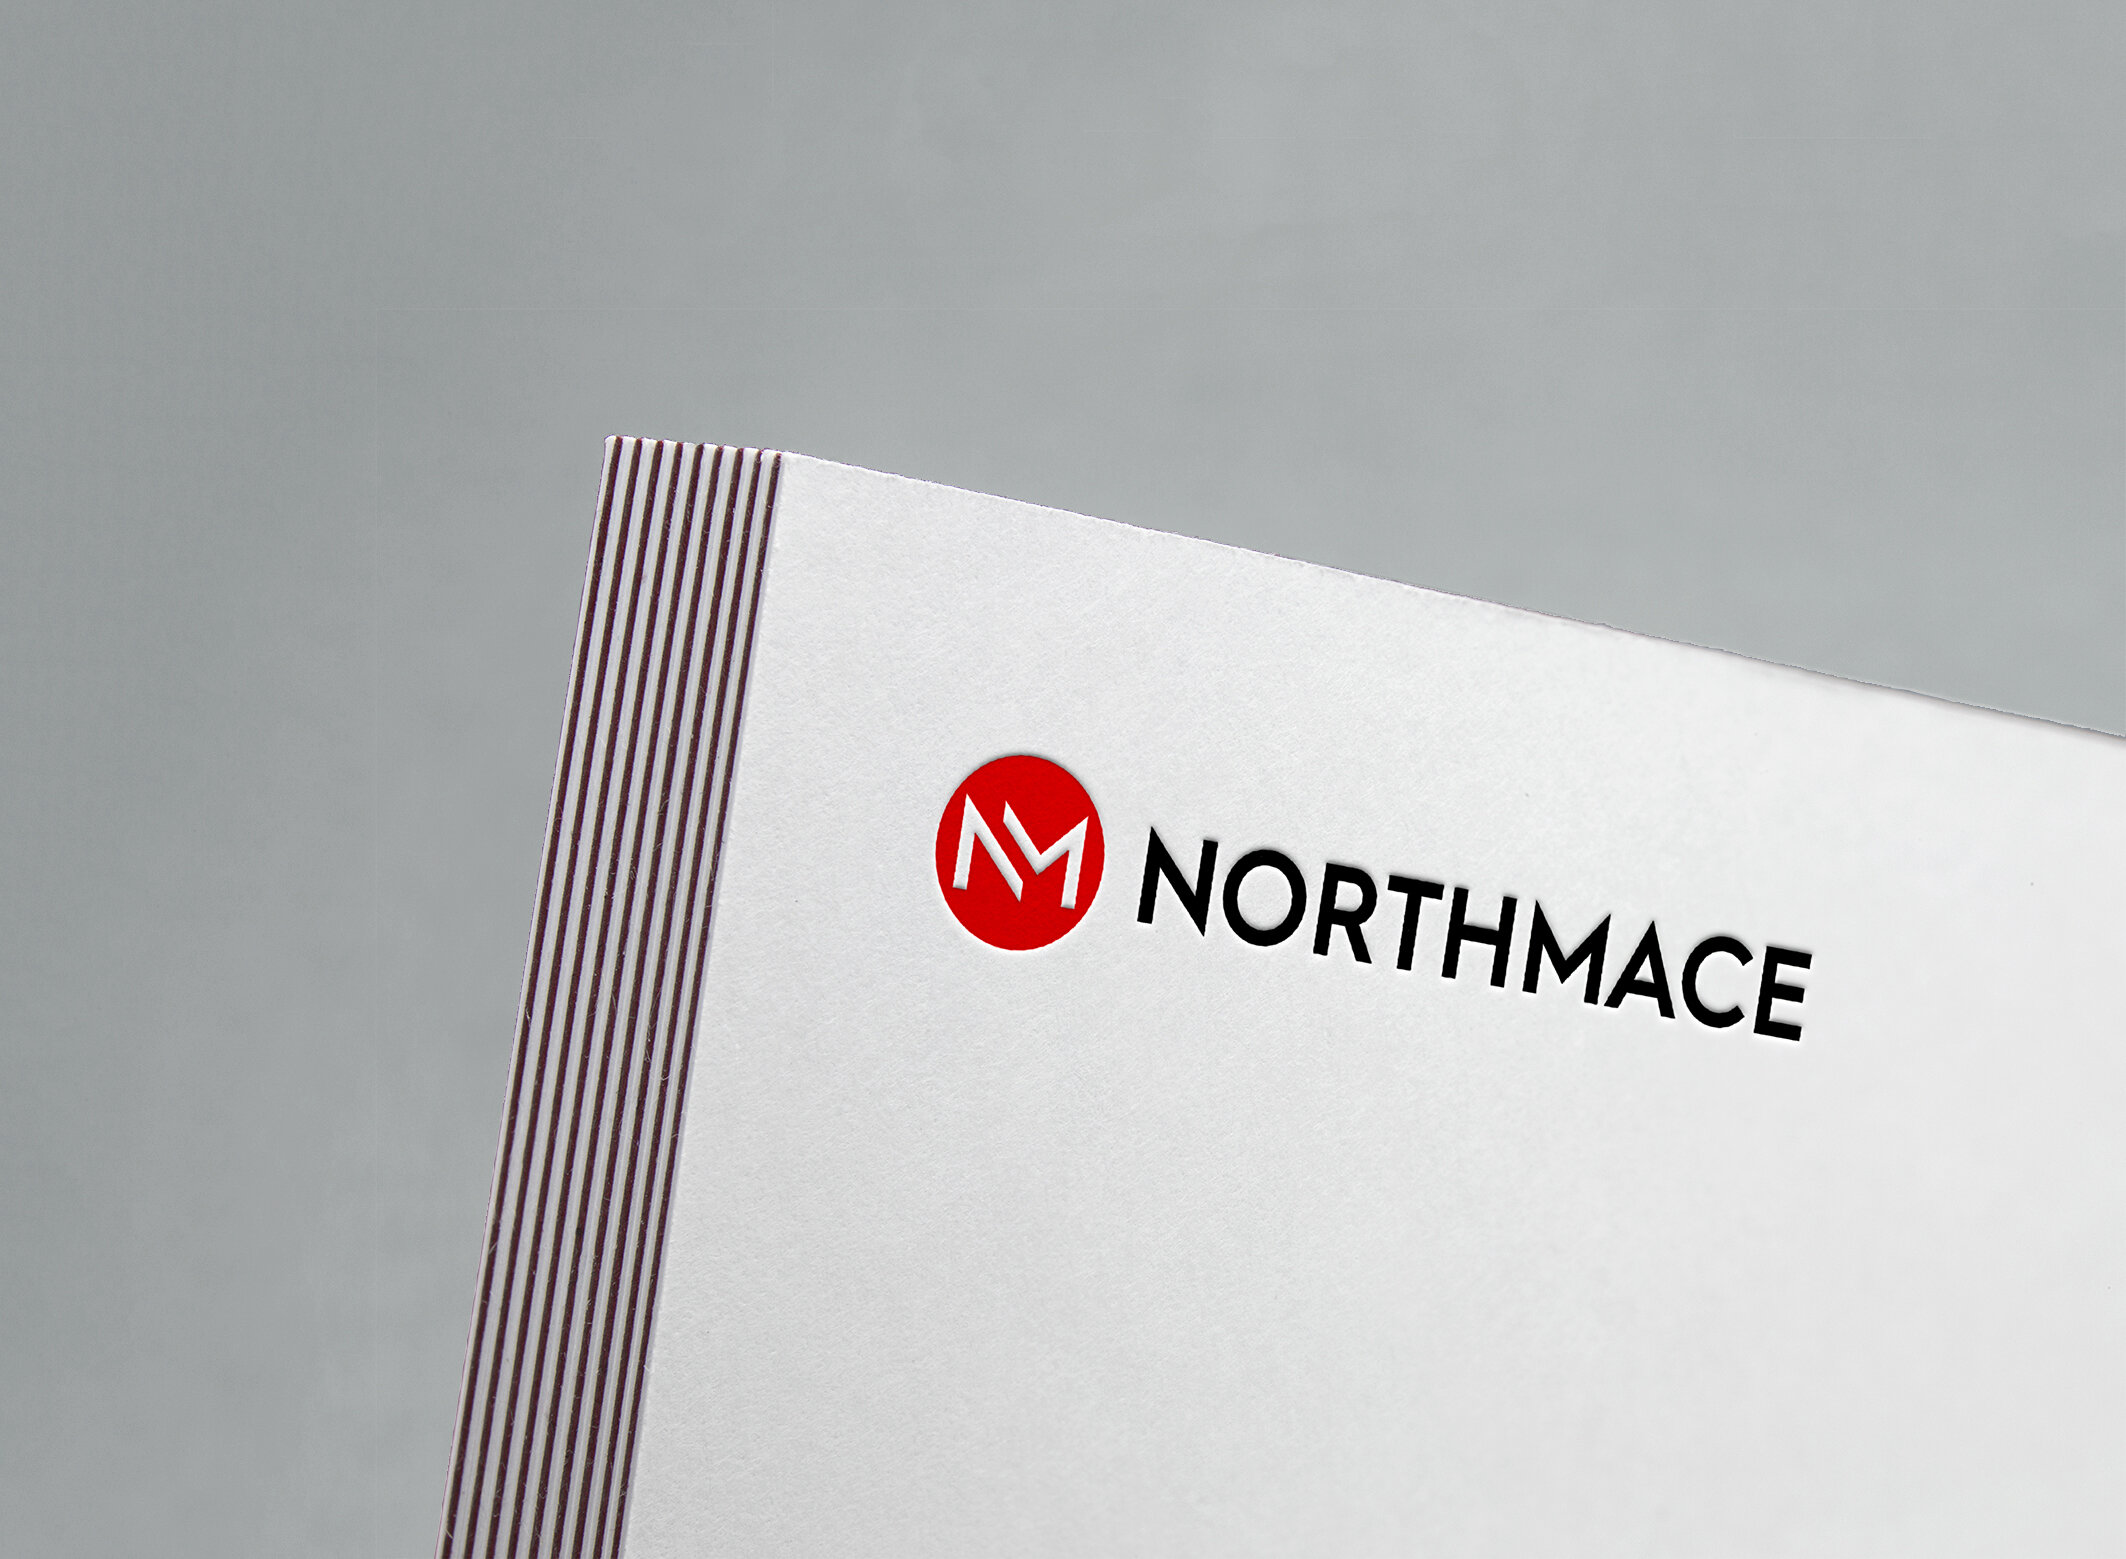 Northmace Andy Bain Branding design